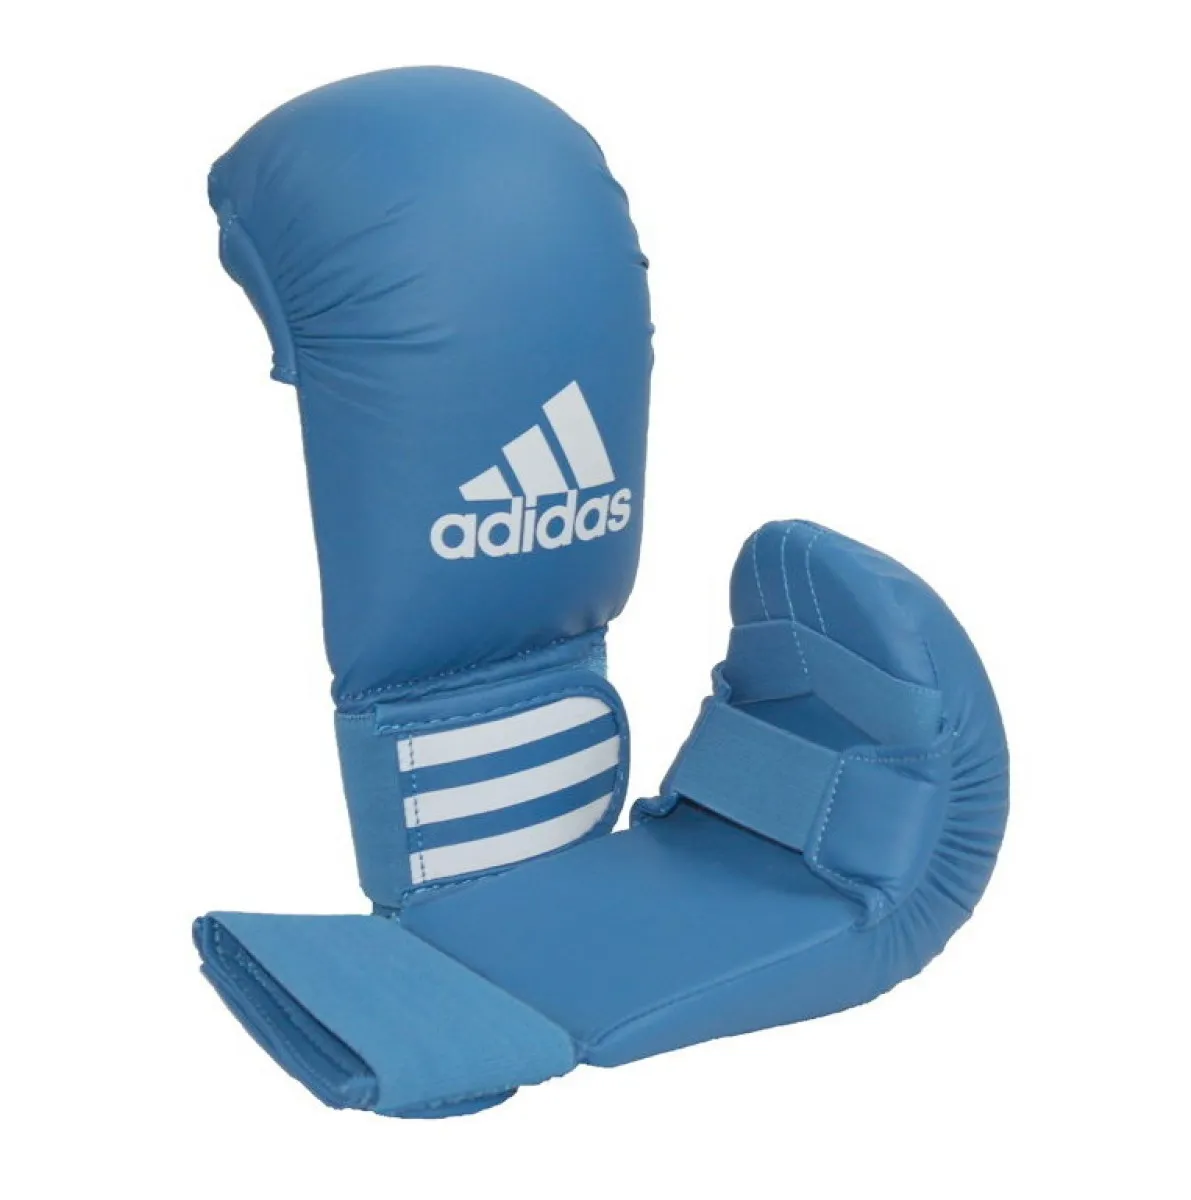 Protège-poings adidas Training bleu